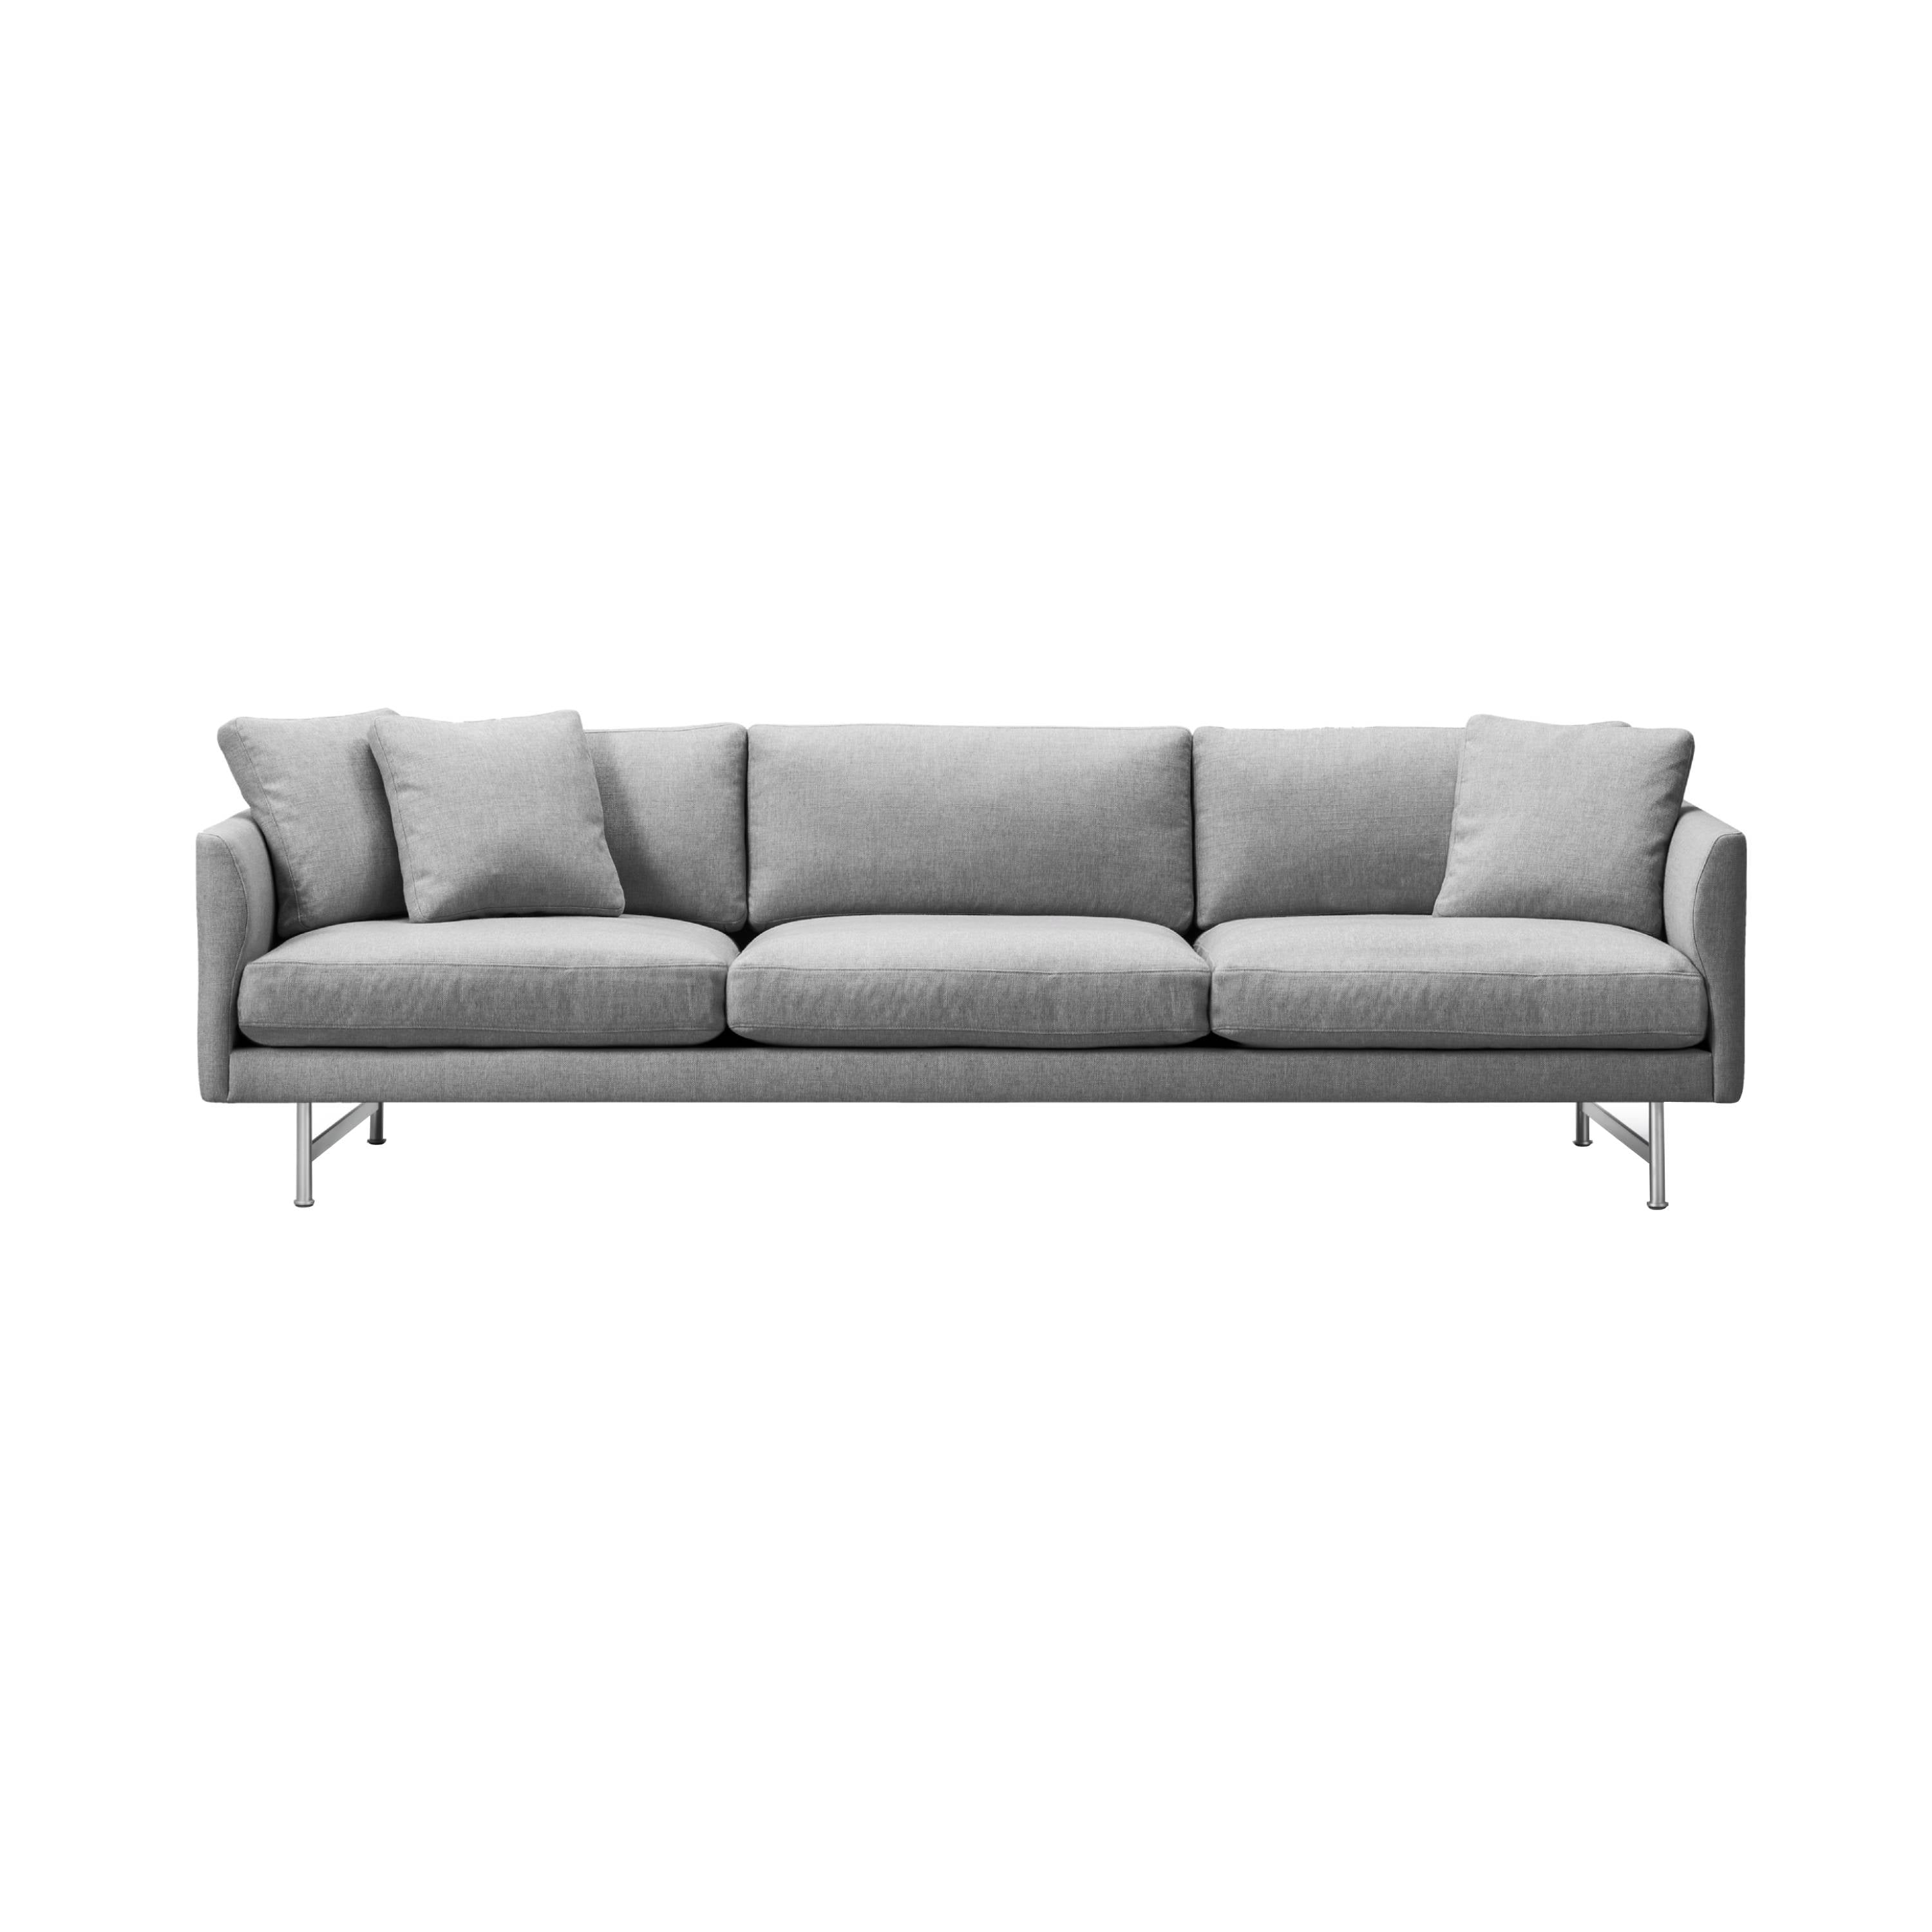 Calmo 3 Seater Sofa: Metal Base + Small - 98.4" + Mat Chrome (With Cushion)